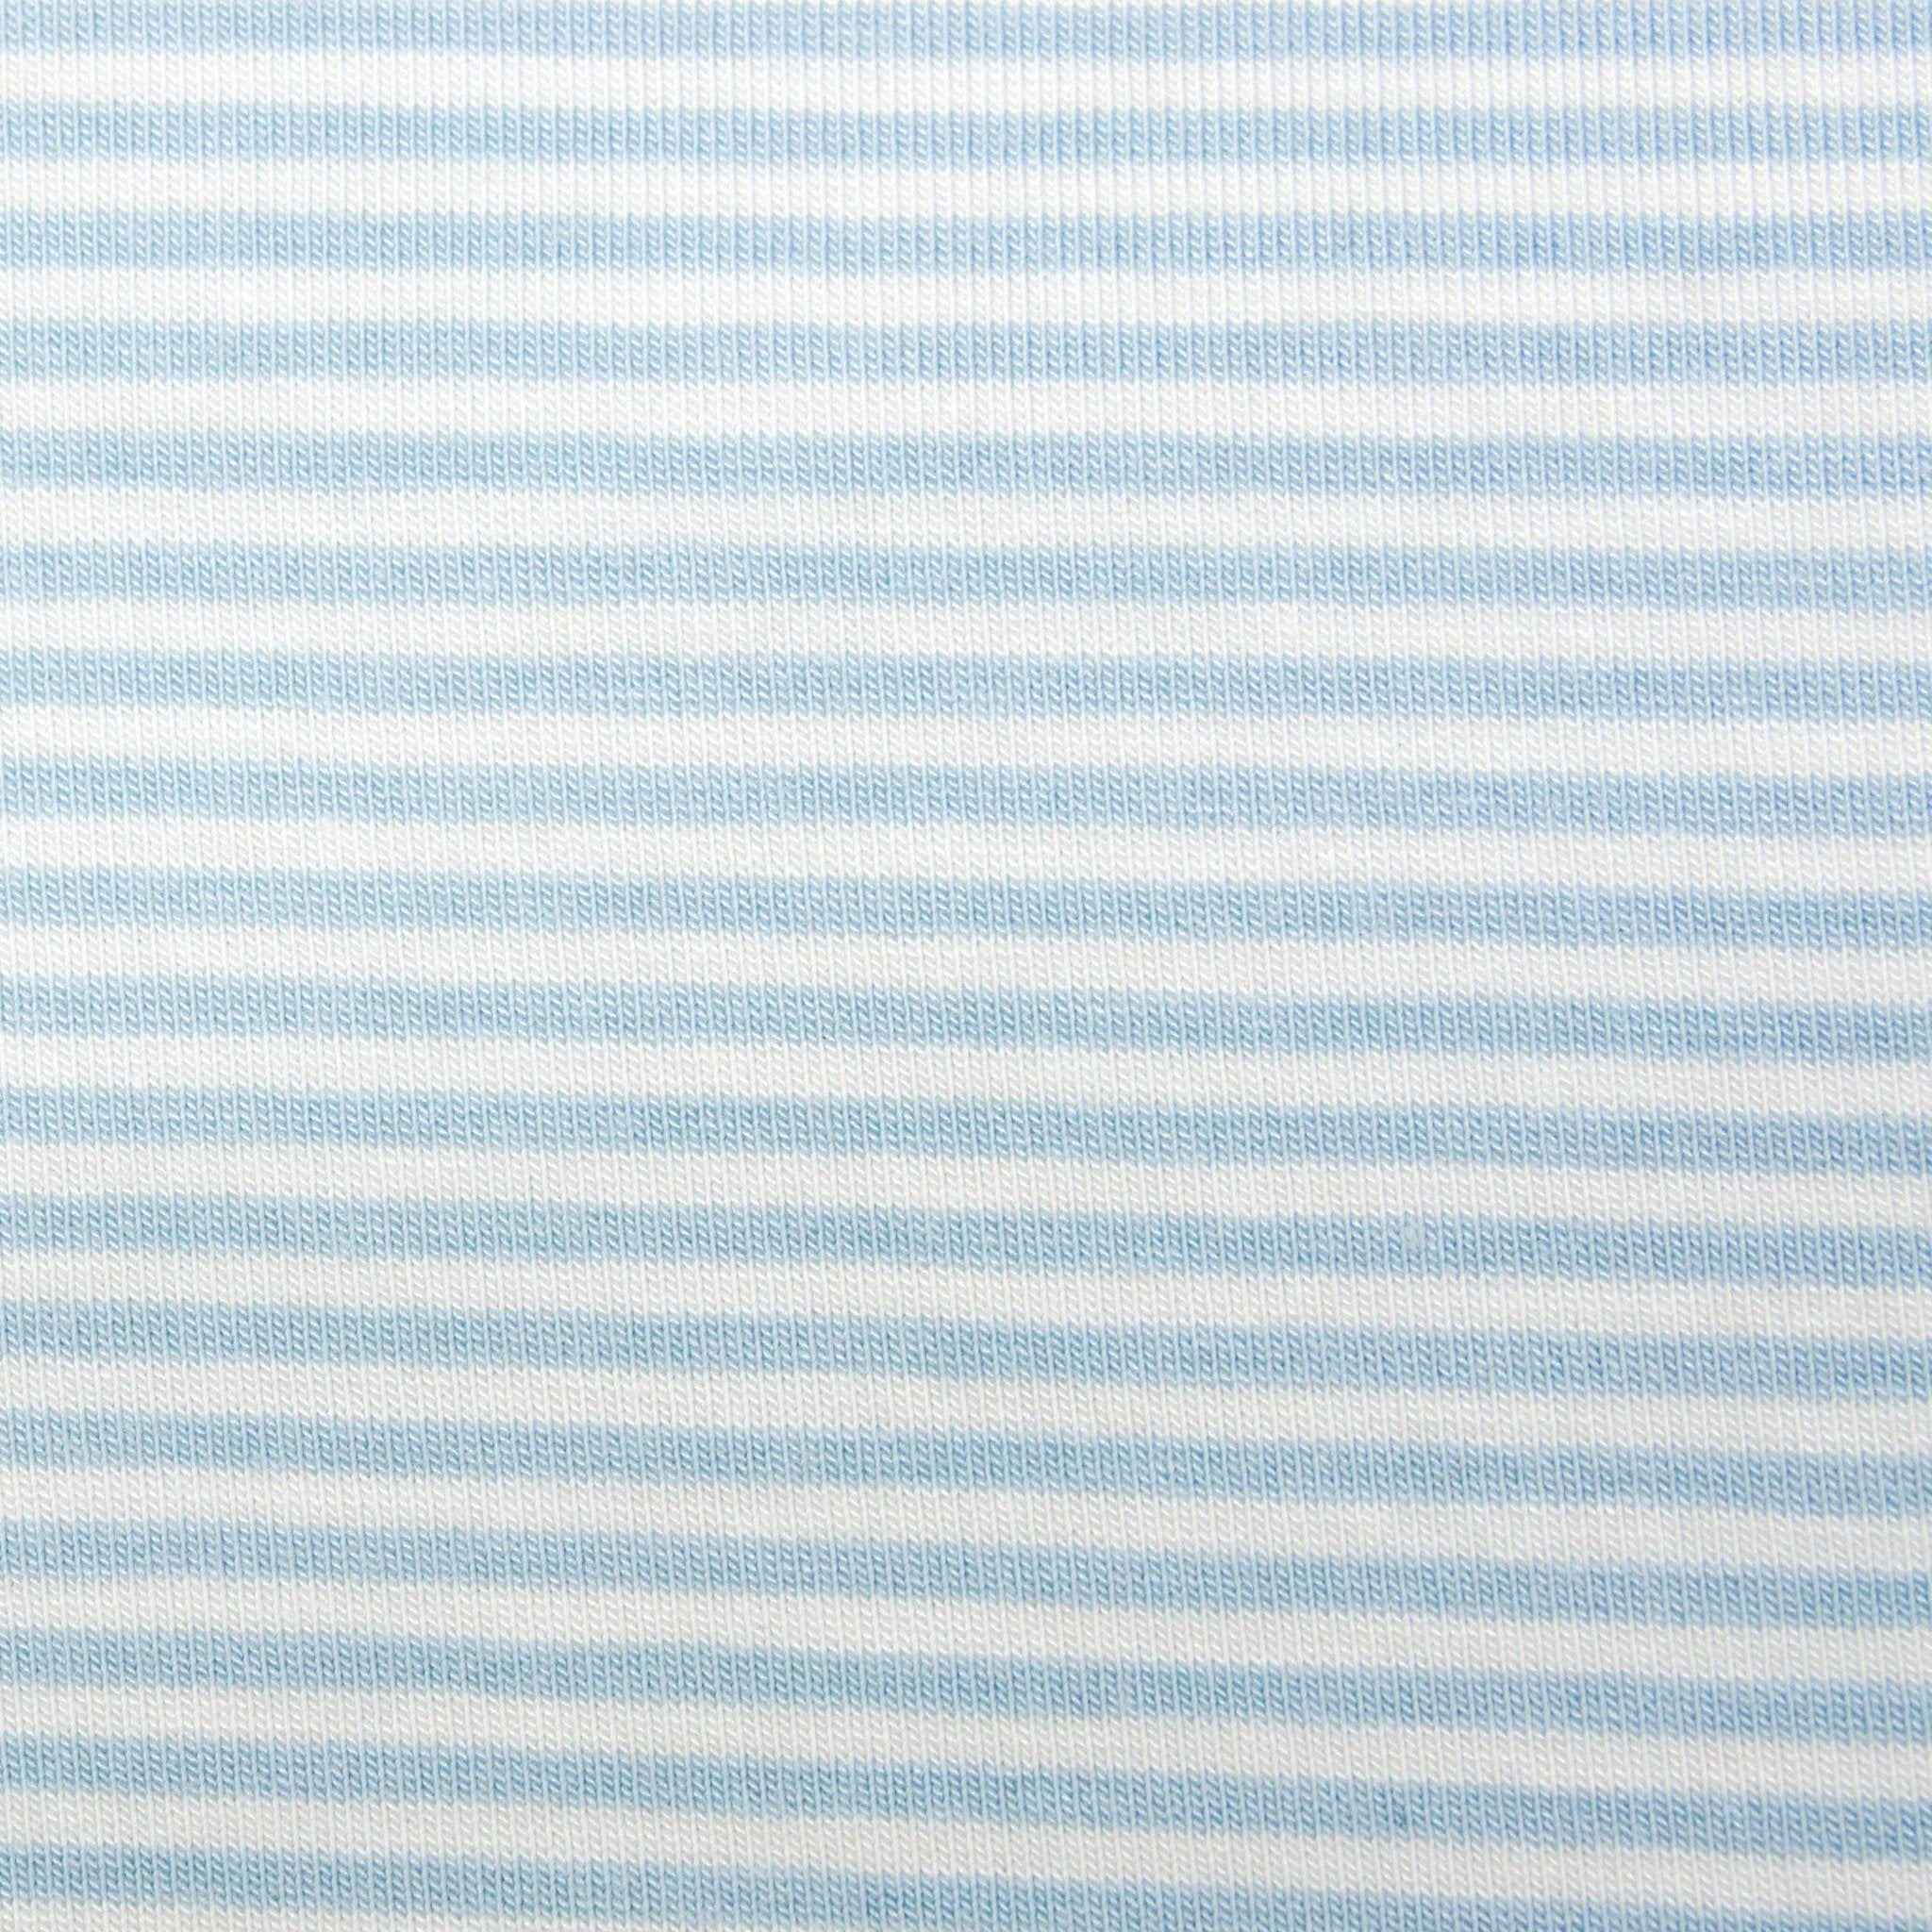 Organic Cotton Fabric. Super Soft & Light - ANGEL'S BREATH ( Duck Egg Blue )